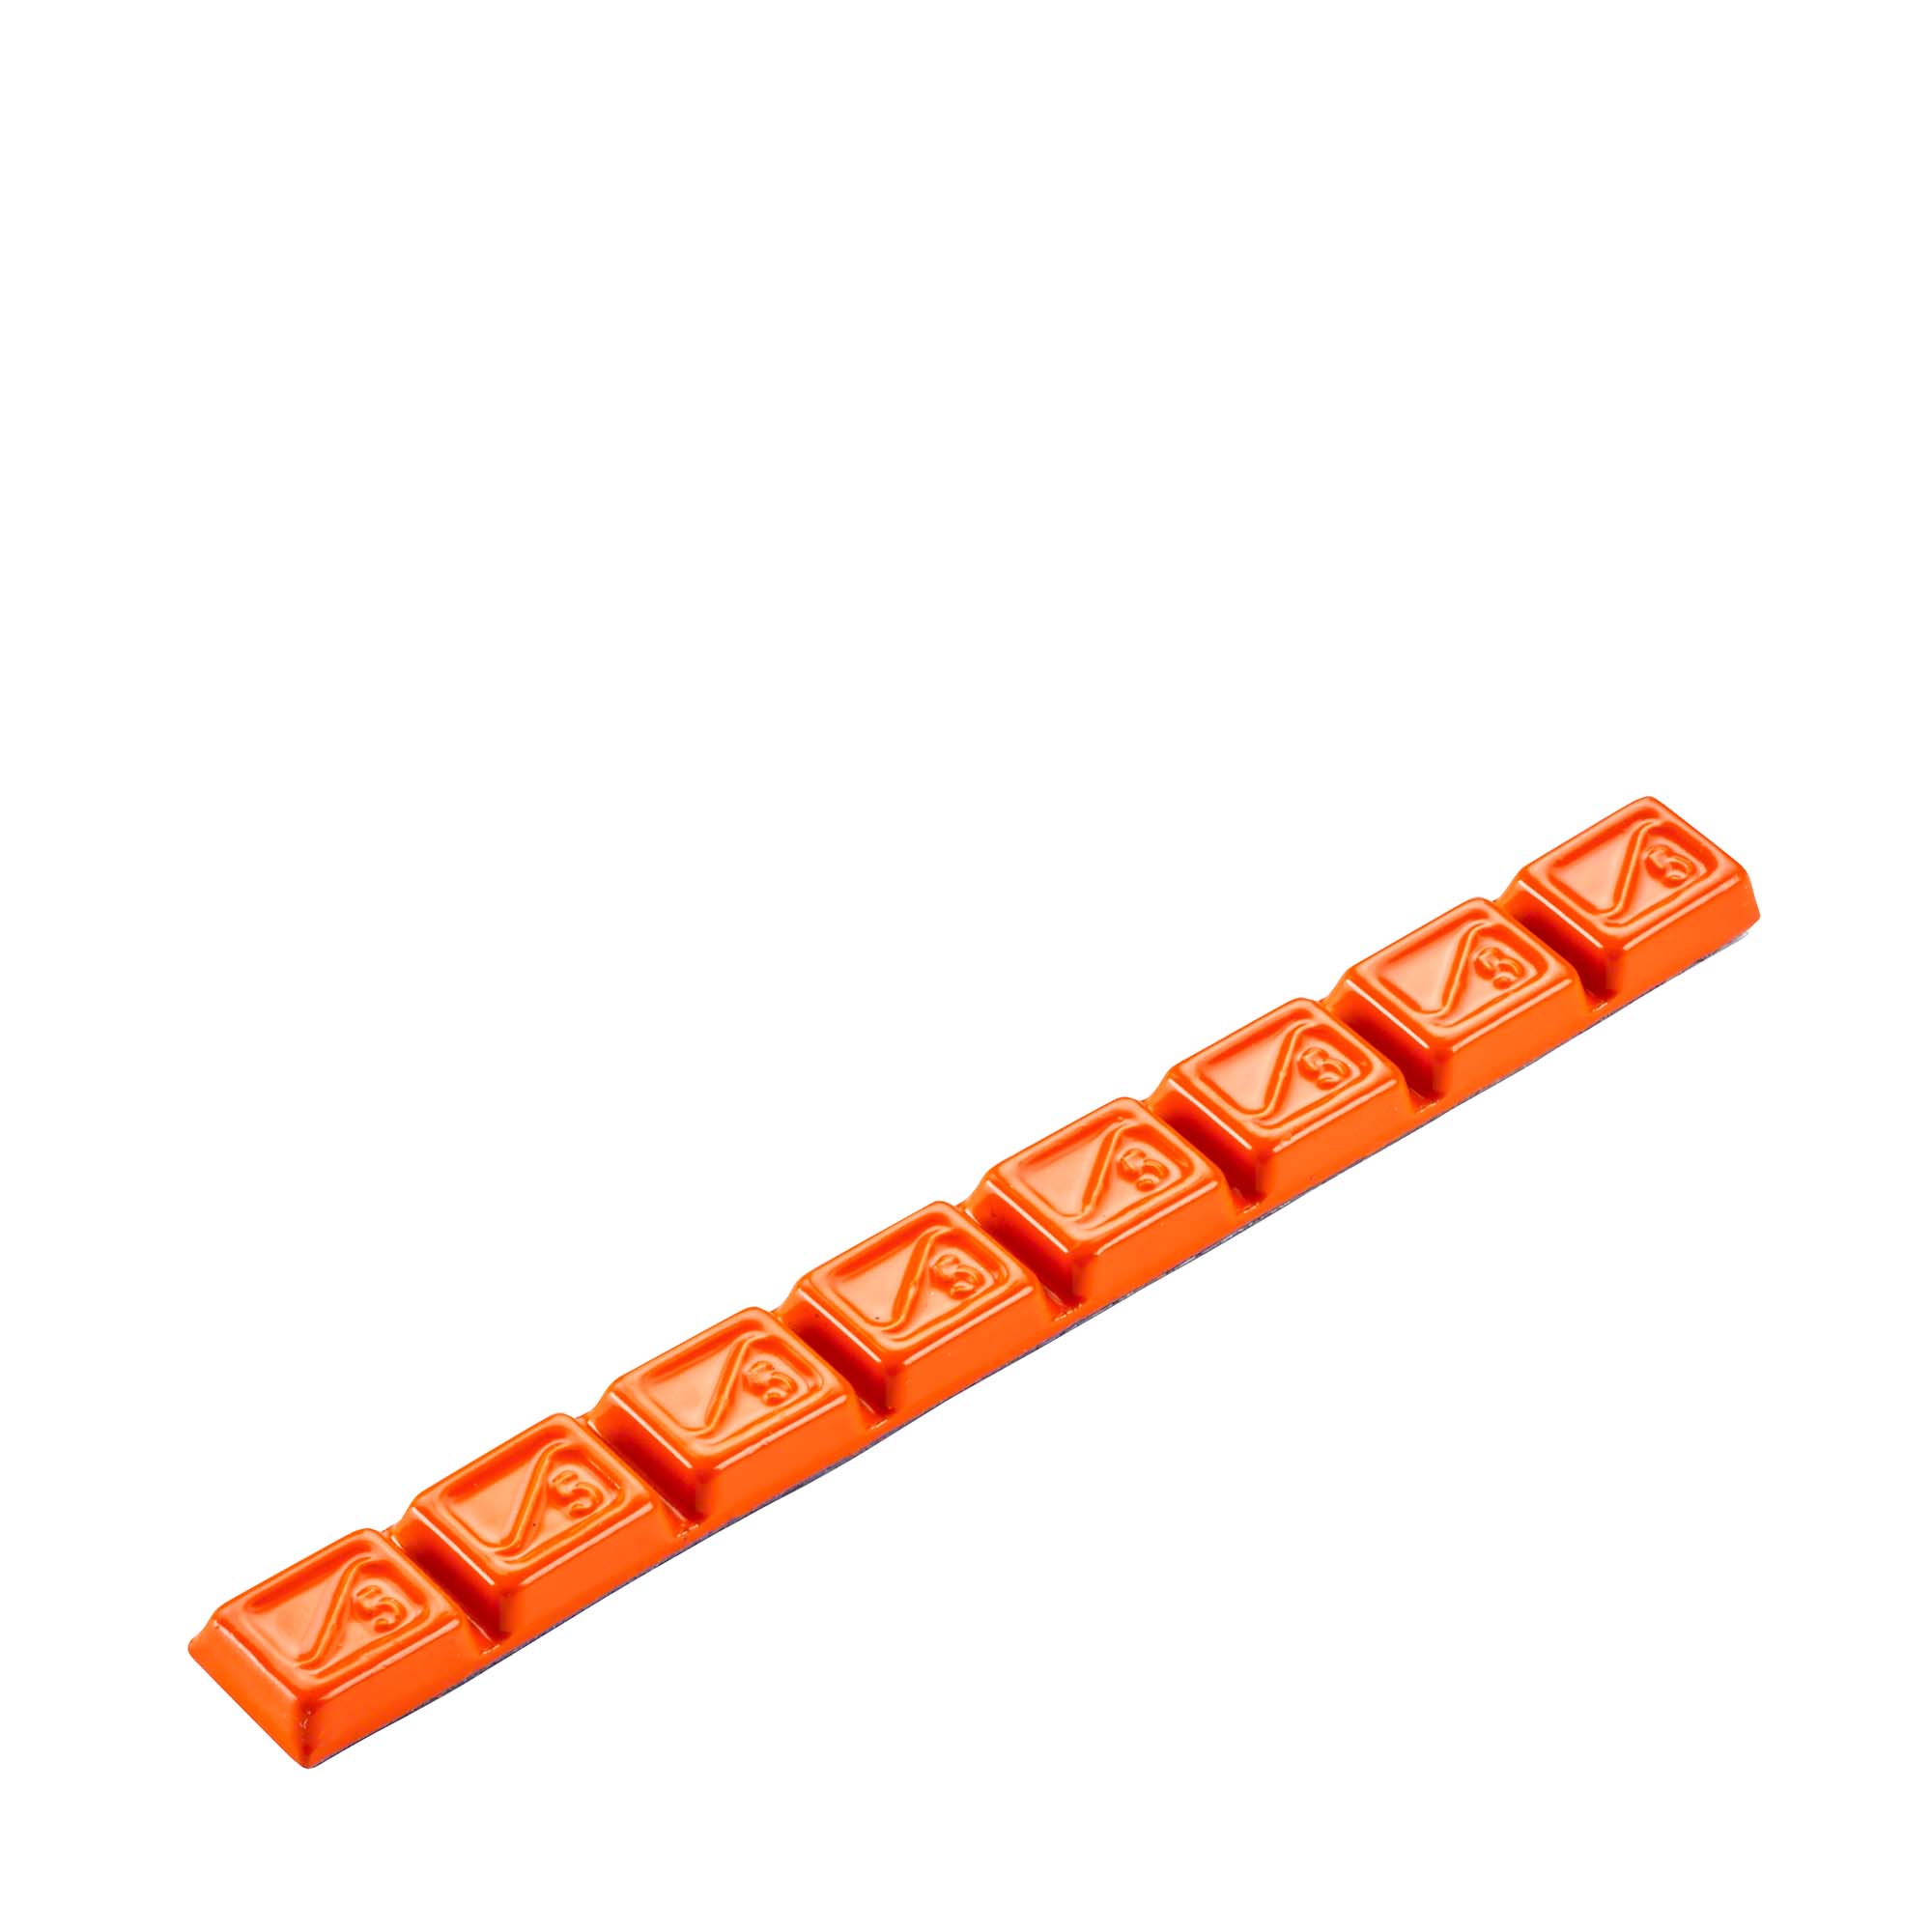 adhesive weight - Typ 706, 40 g, Lead, orange